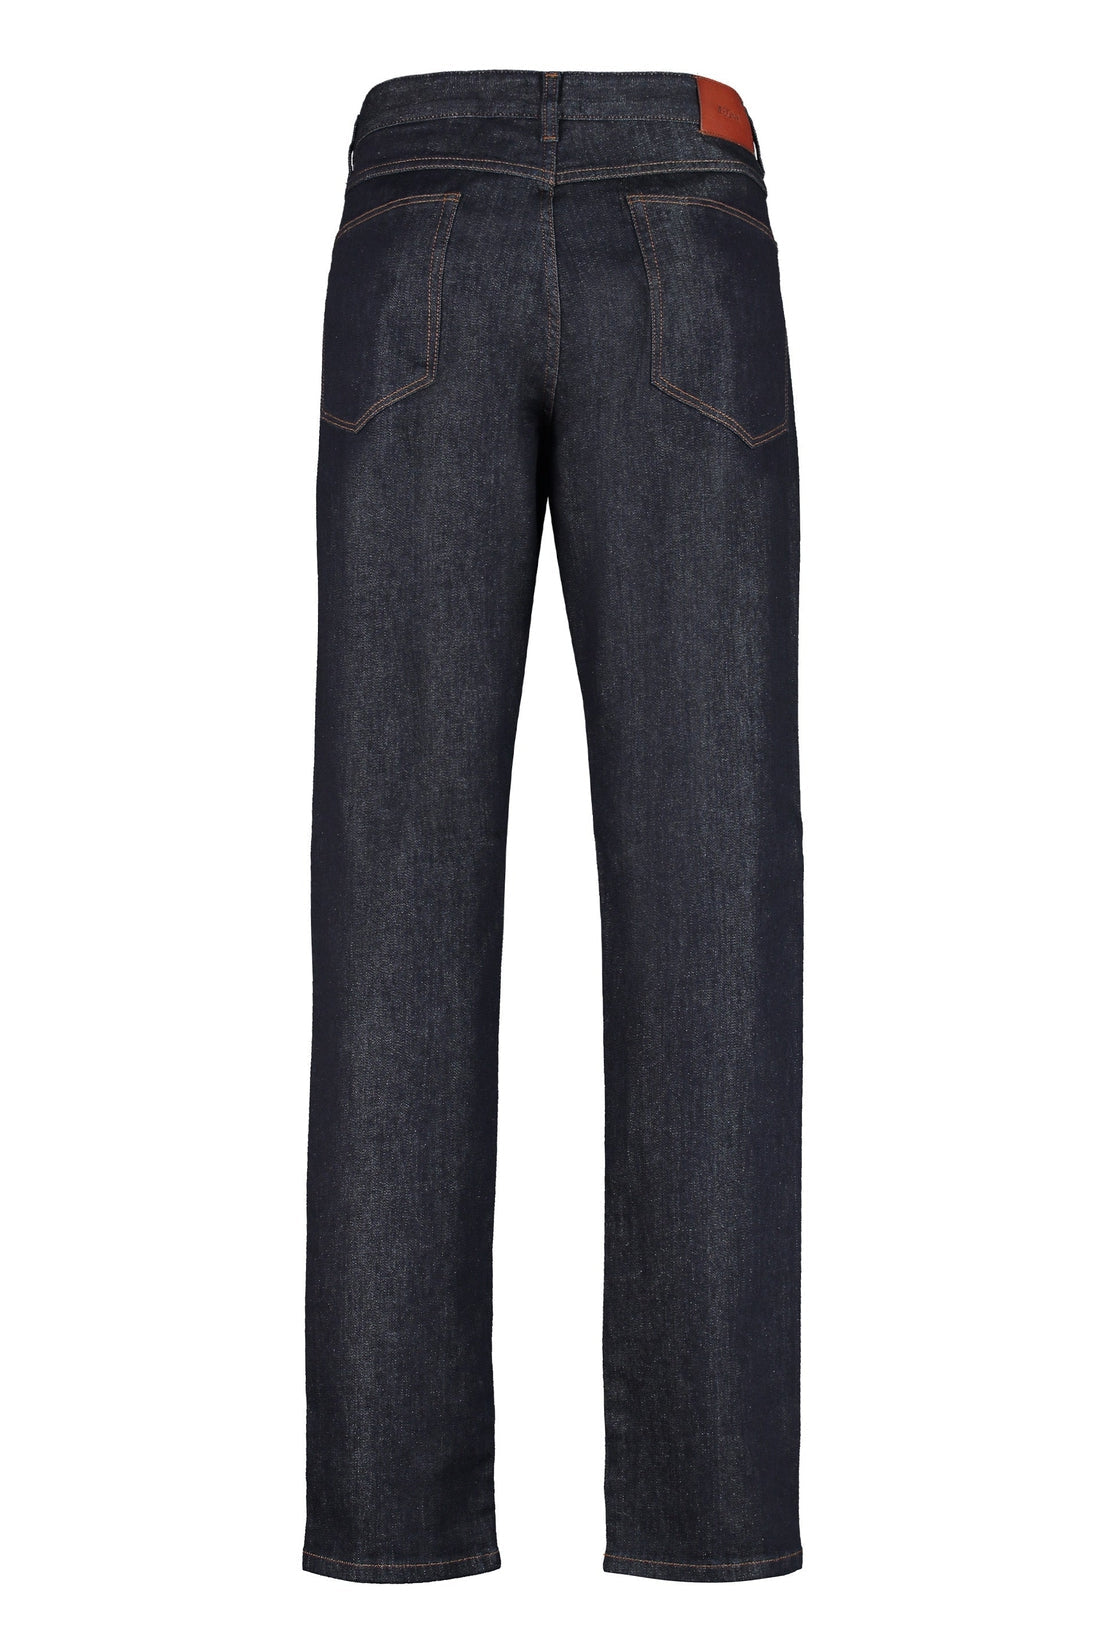 Zegna-OUTLET-SALE-5-pocket jeans-ARCHIVIST